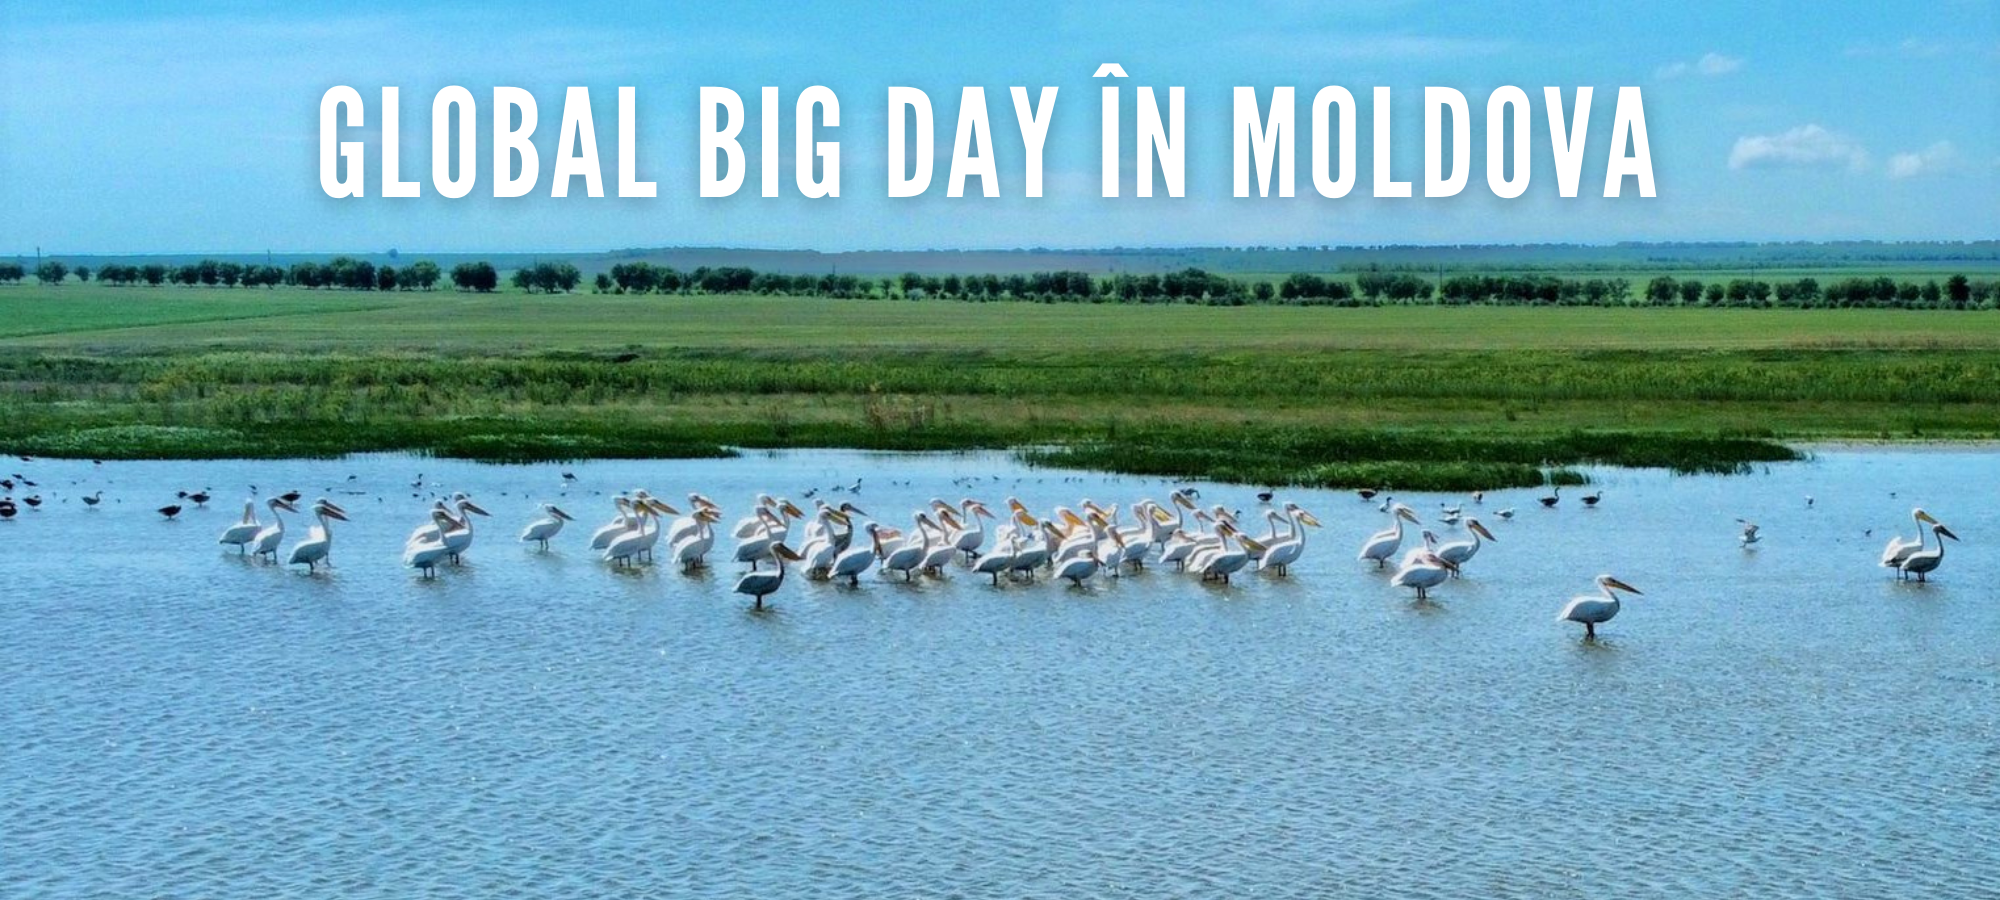 O nouă ediție a Global Big Day în Moldova